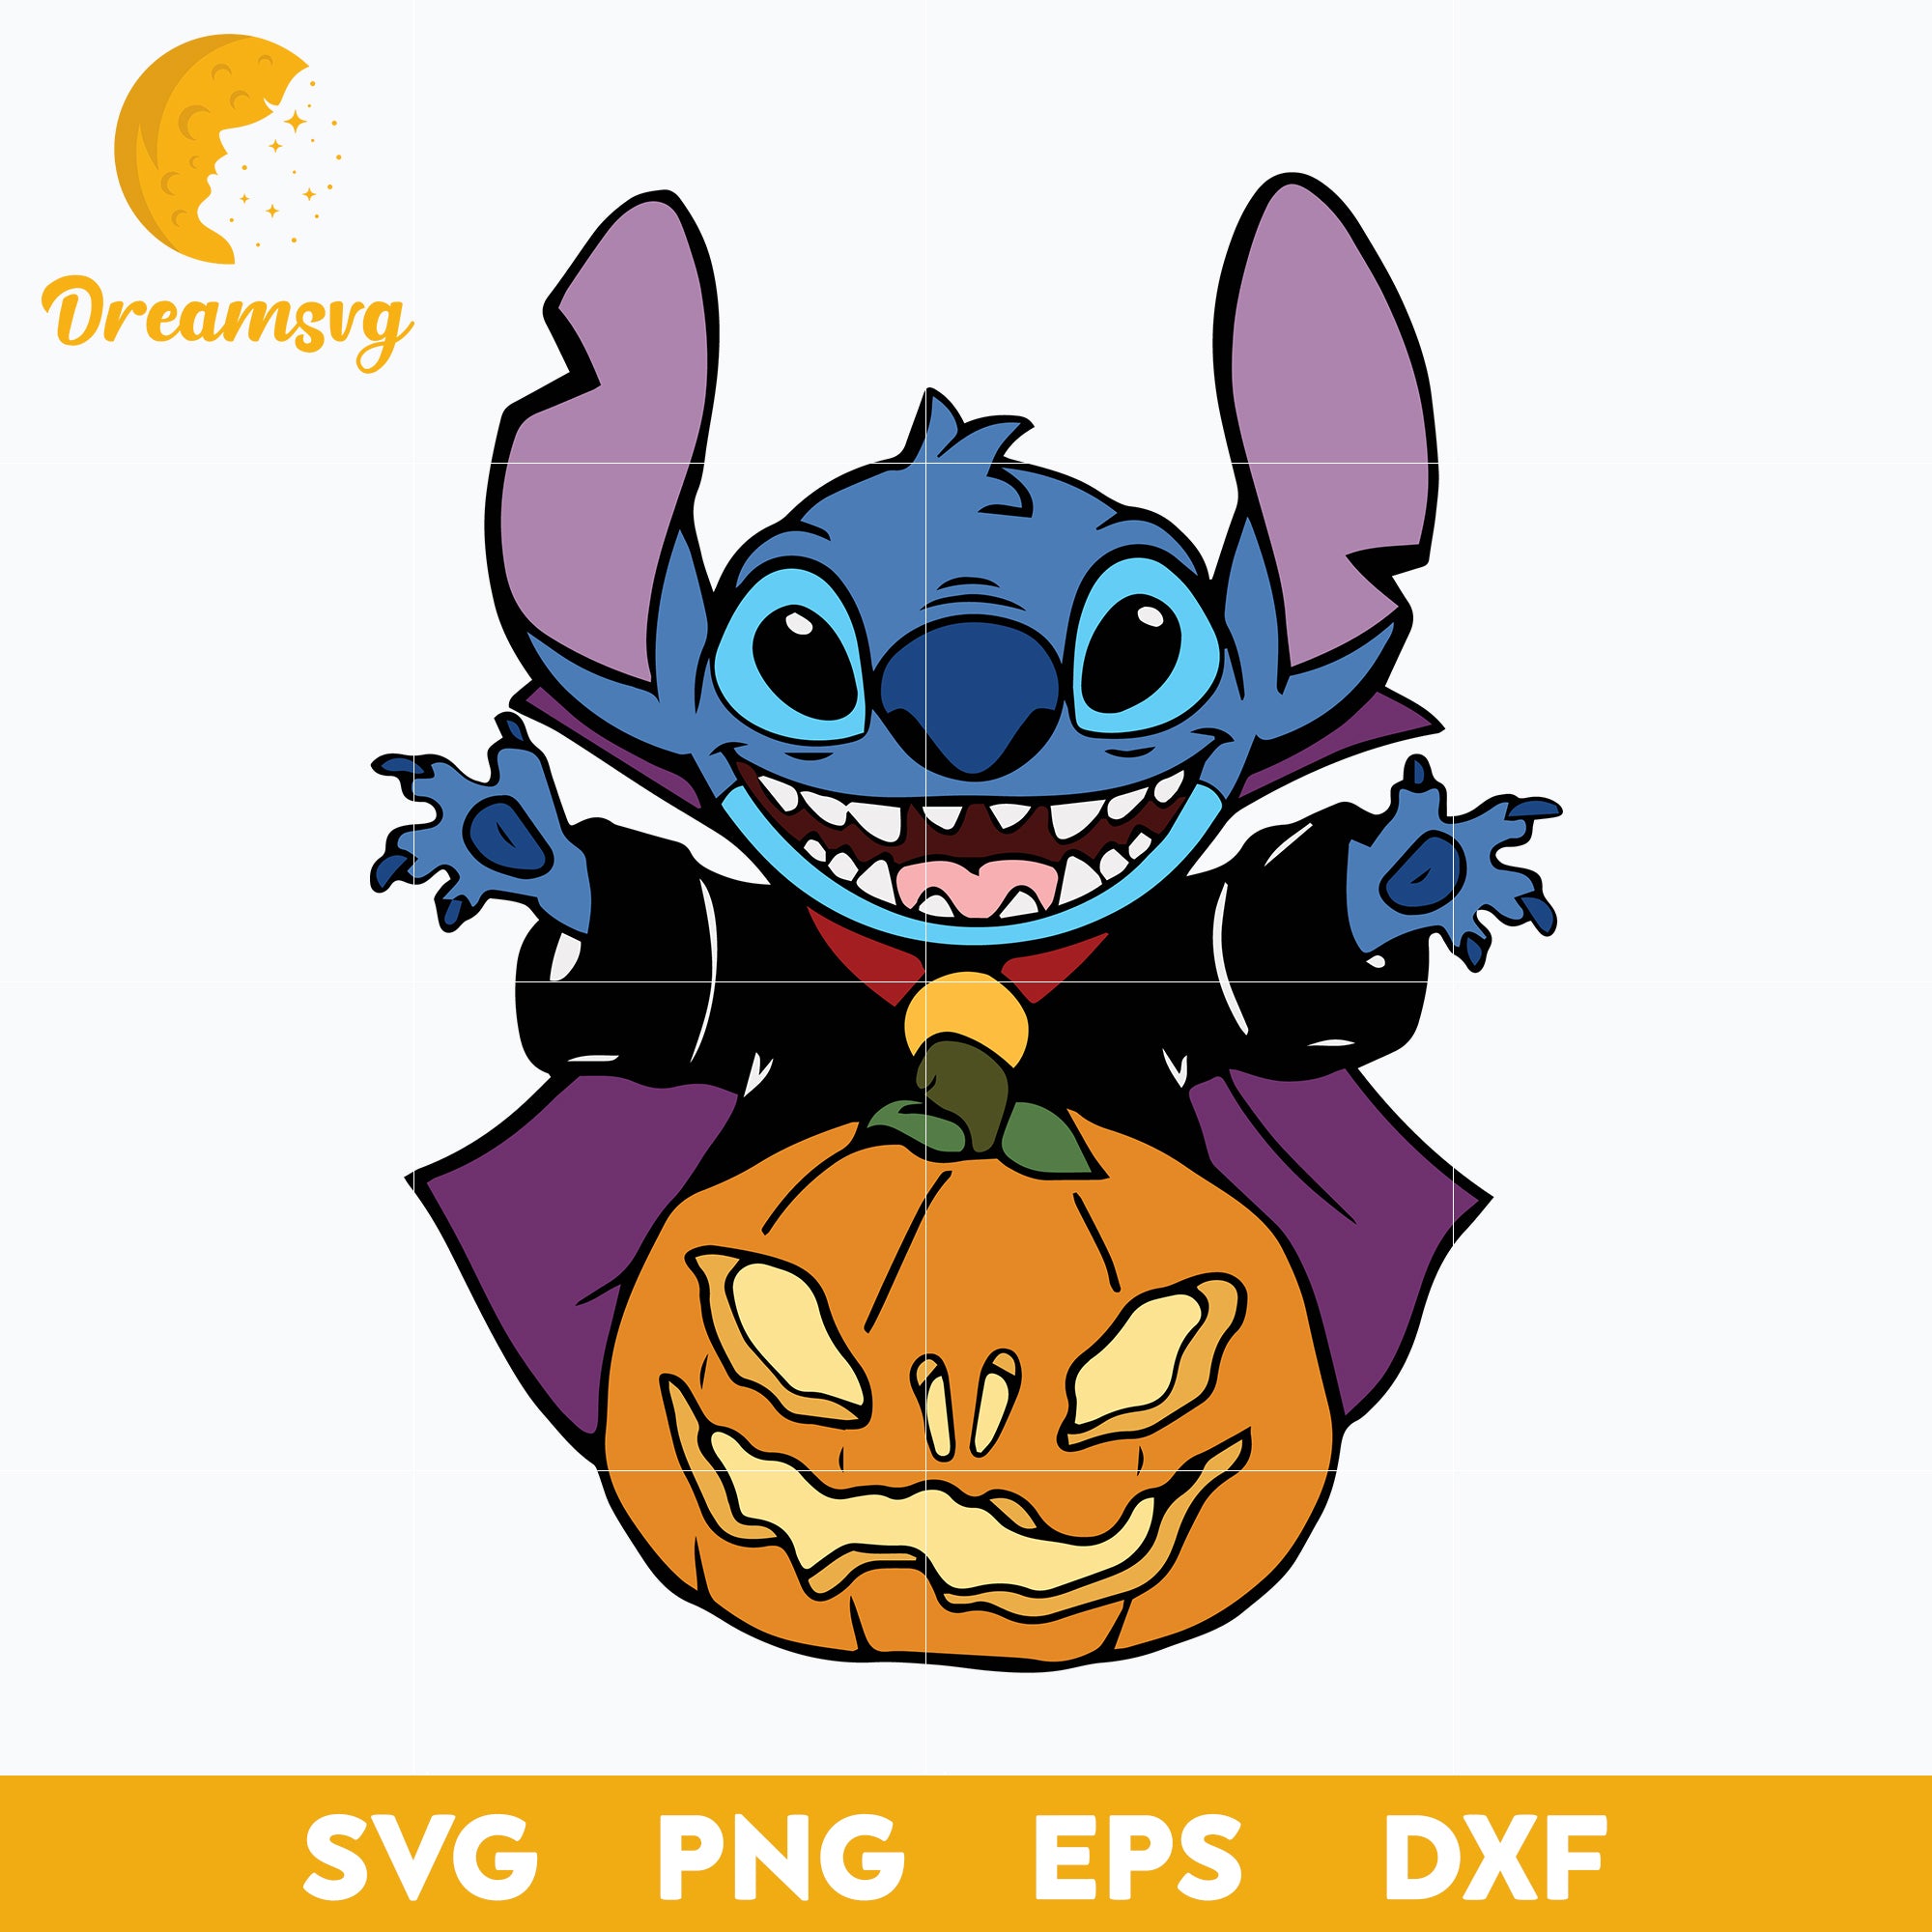 Disney Stitch Candy Halloween SVG, Vampire Stitch Candy SVG - SVGbees